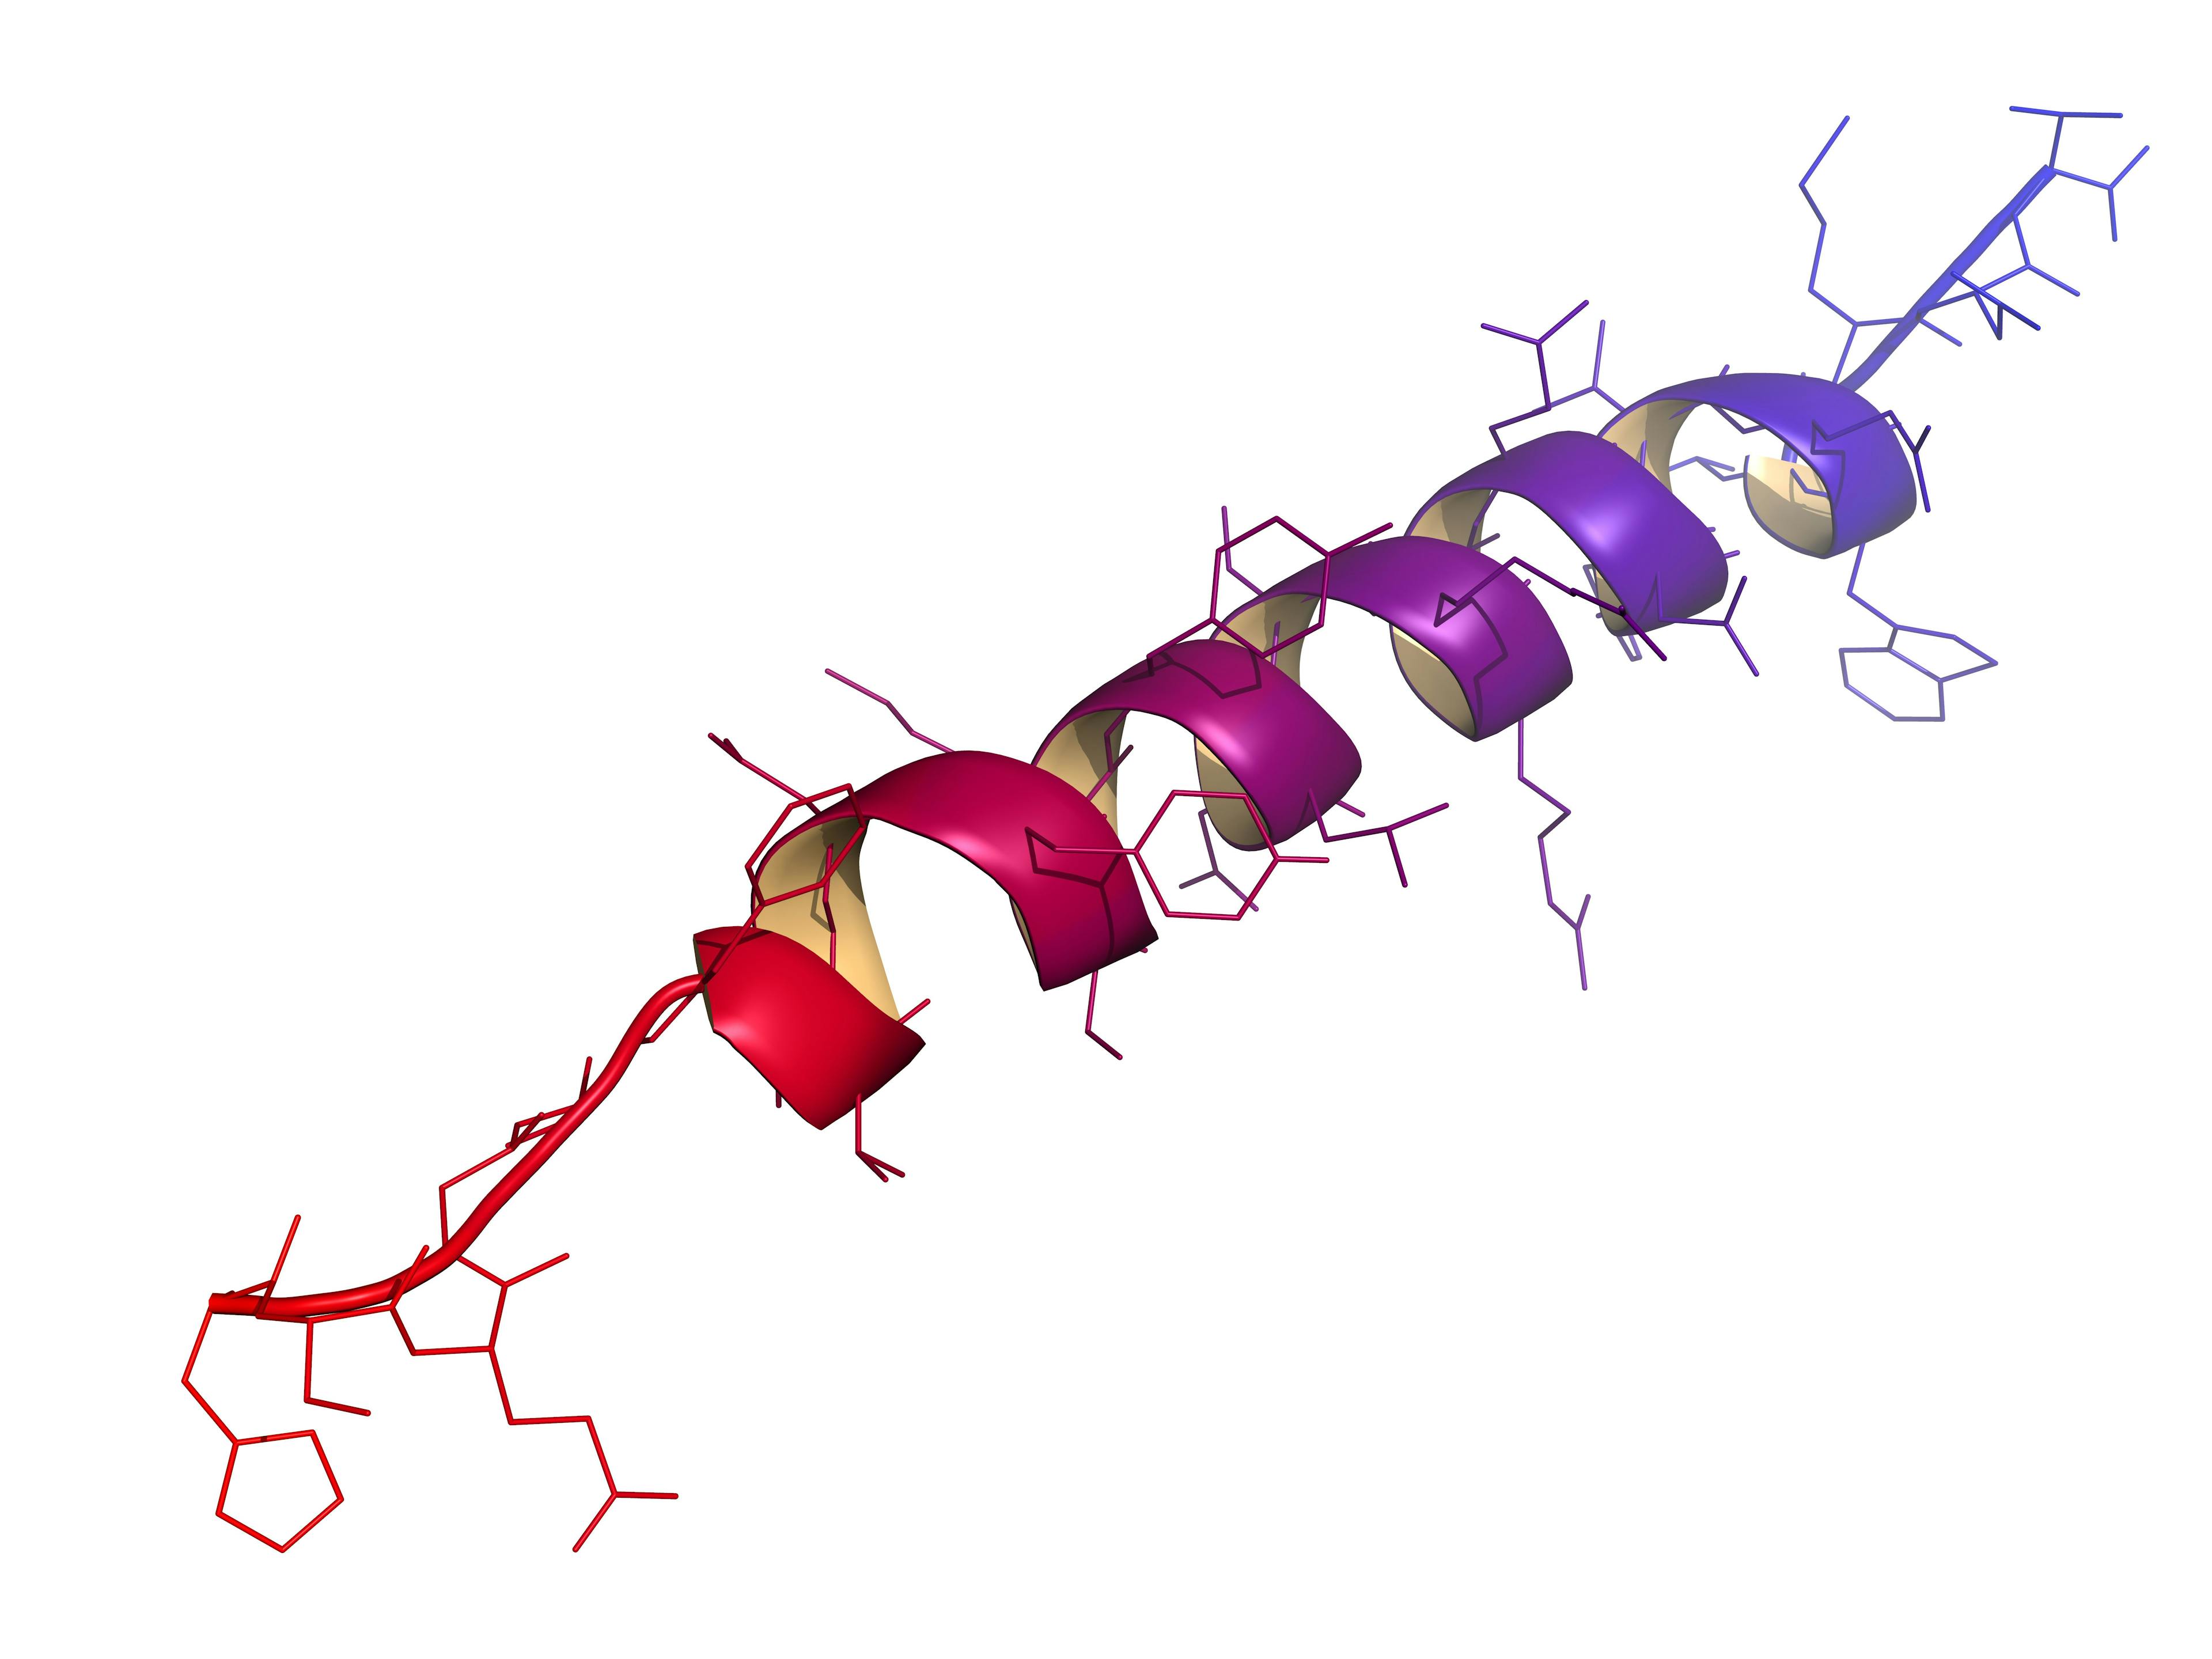 Glucagon peptide hormone molecule, chemical structure | Image Credit: © molekuul.be - stock.adobe.com